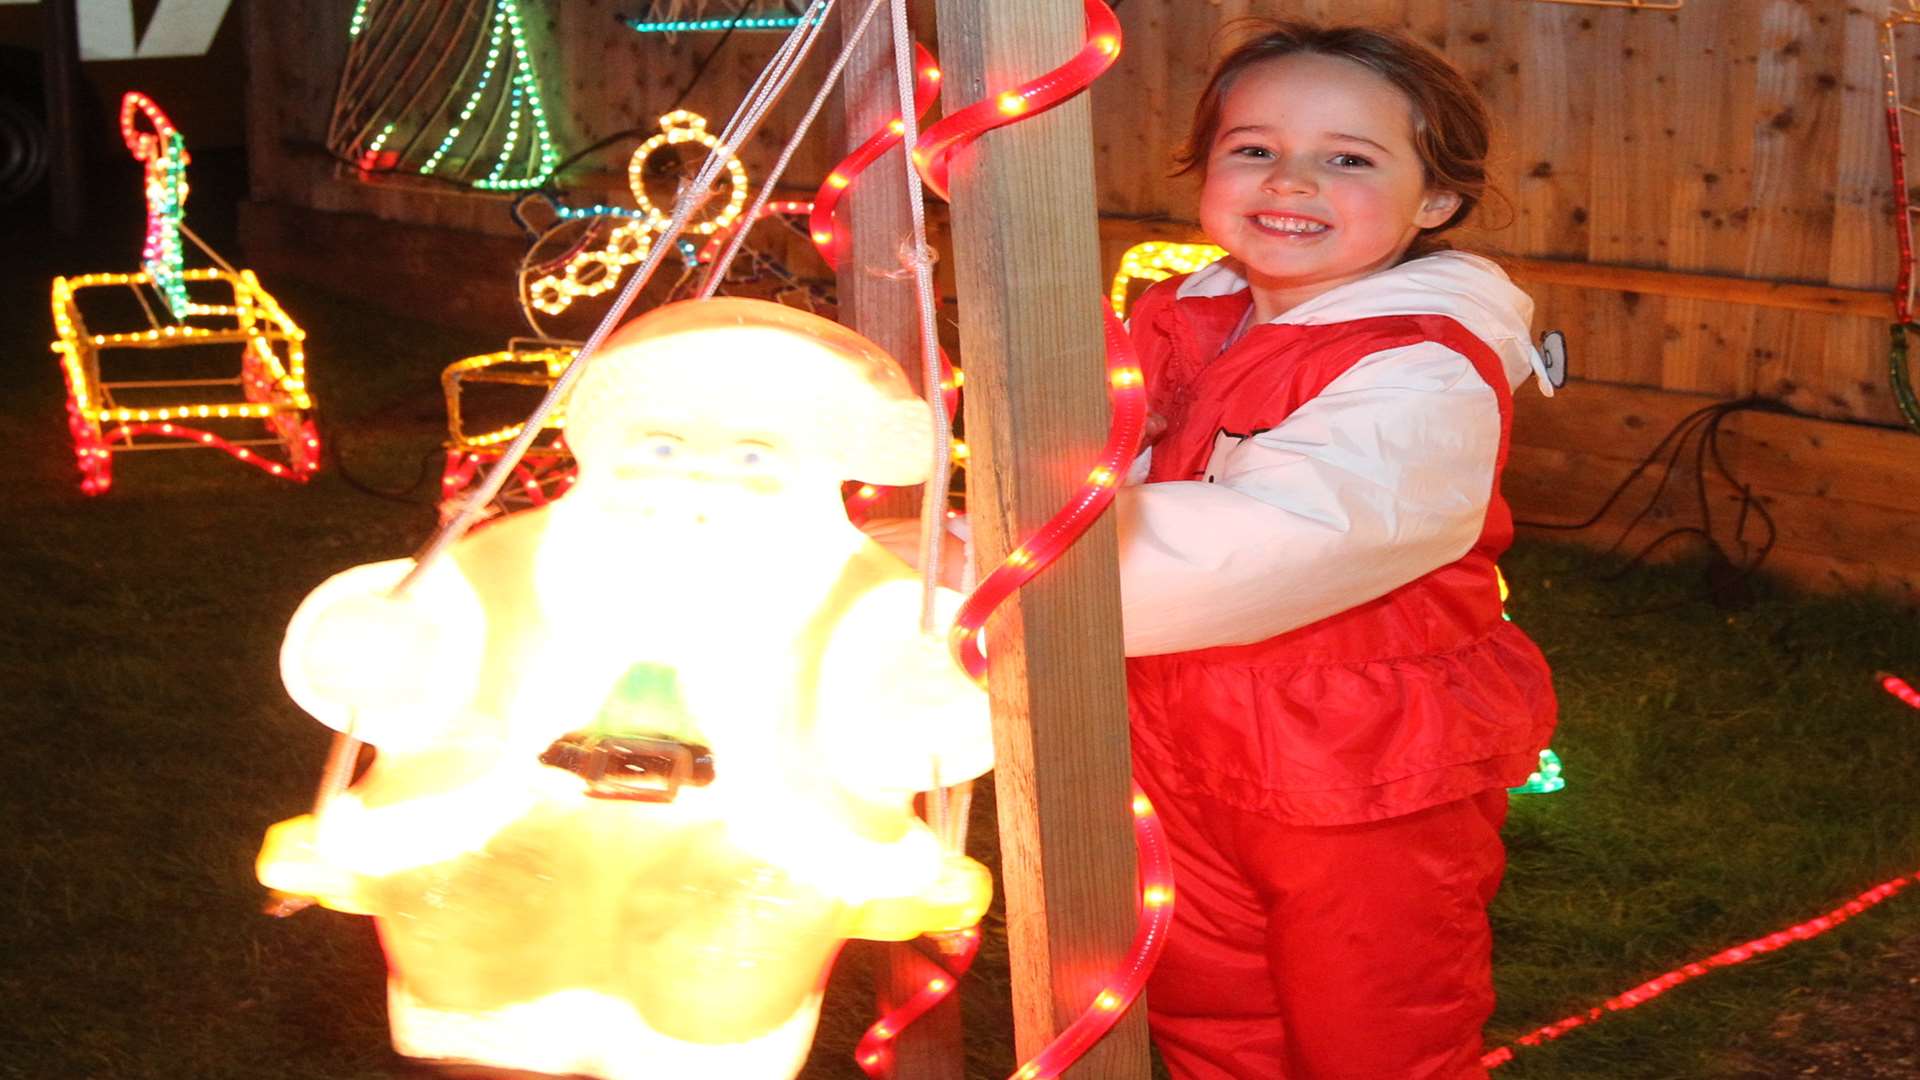 Four-year-old Abigail enjoys the festivities